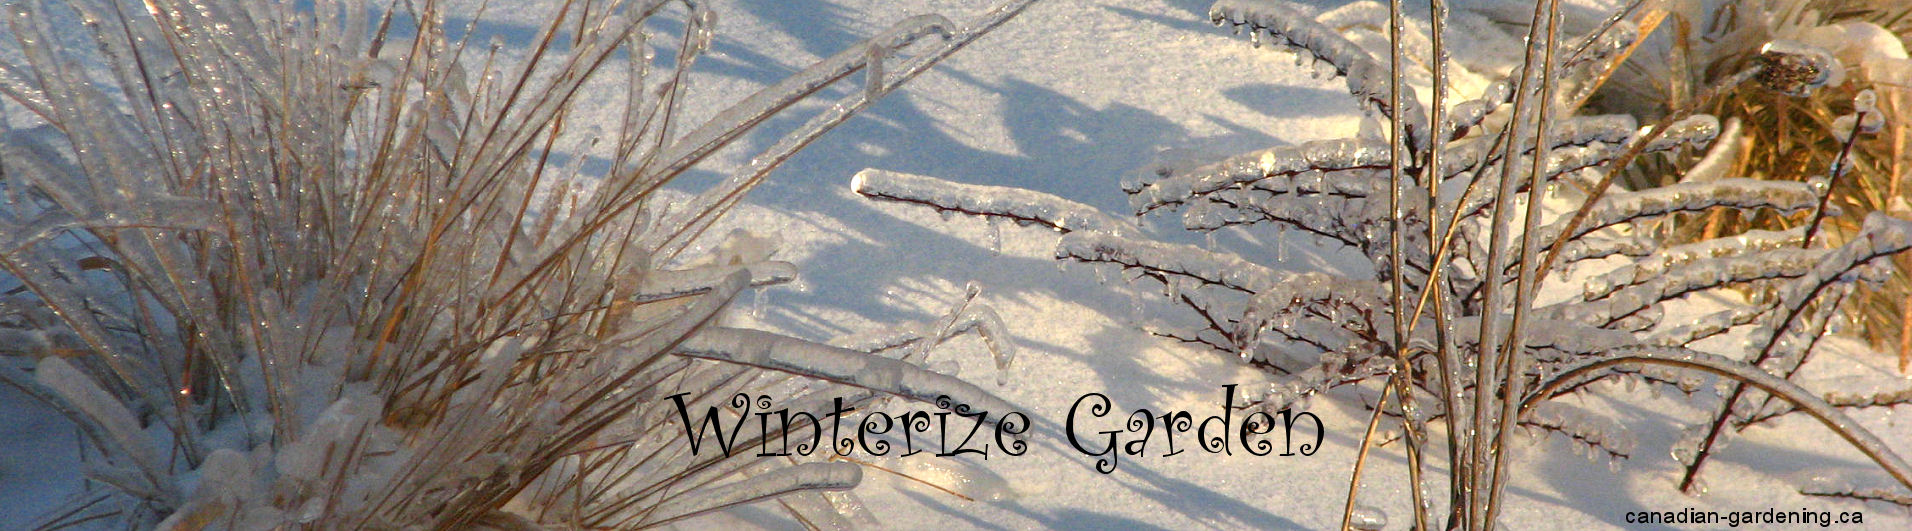 winterize the garden before winter arrives logo